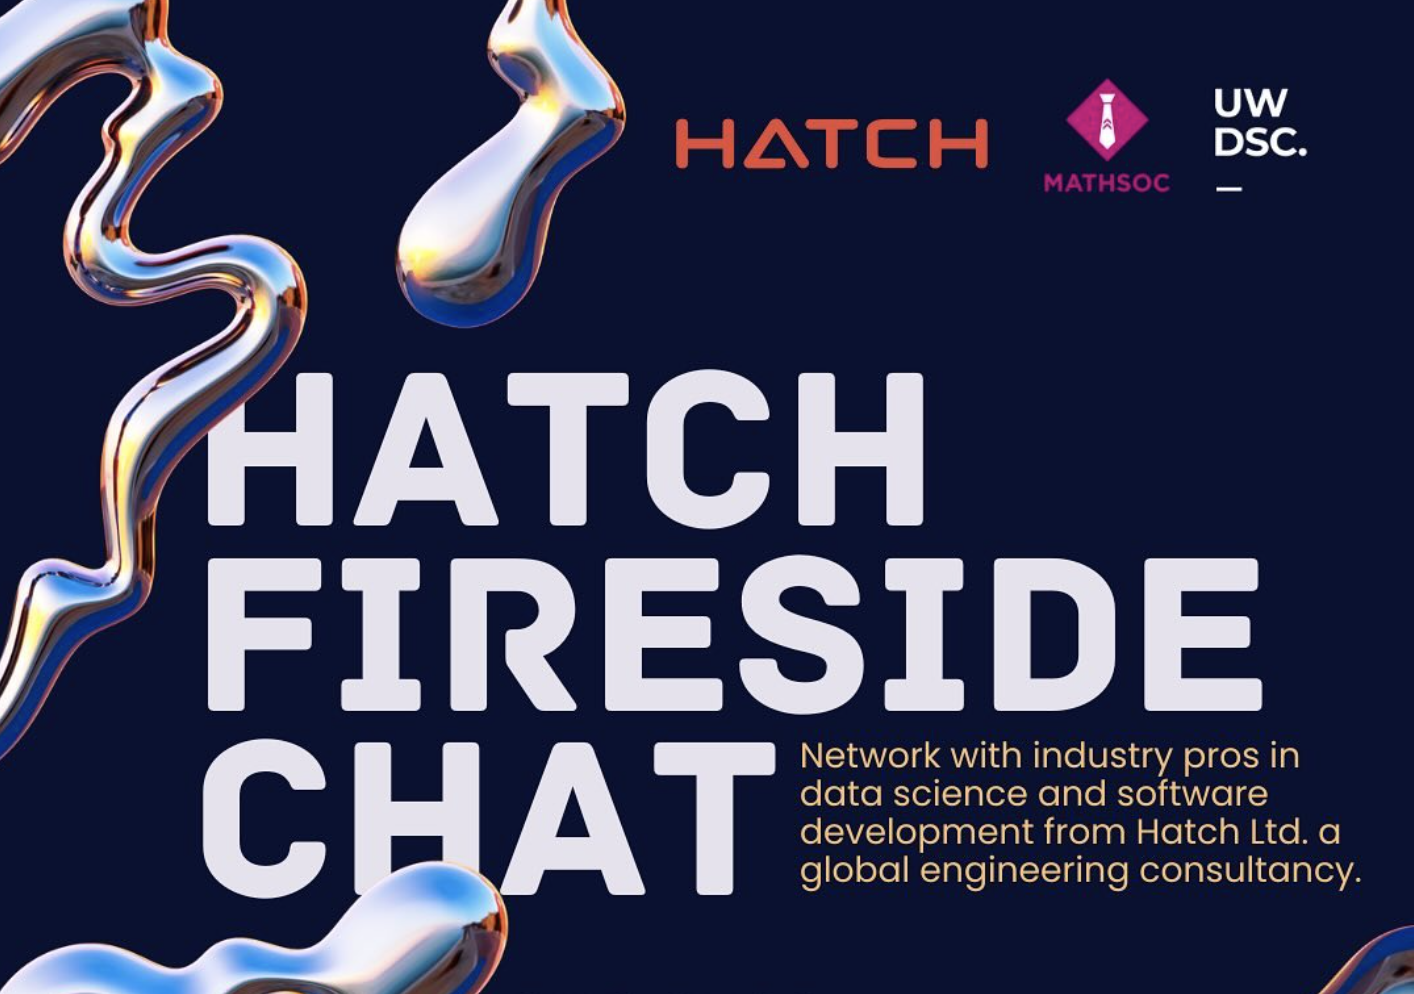 Hatch Fireside Chat